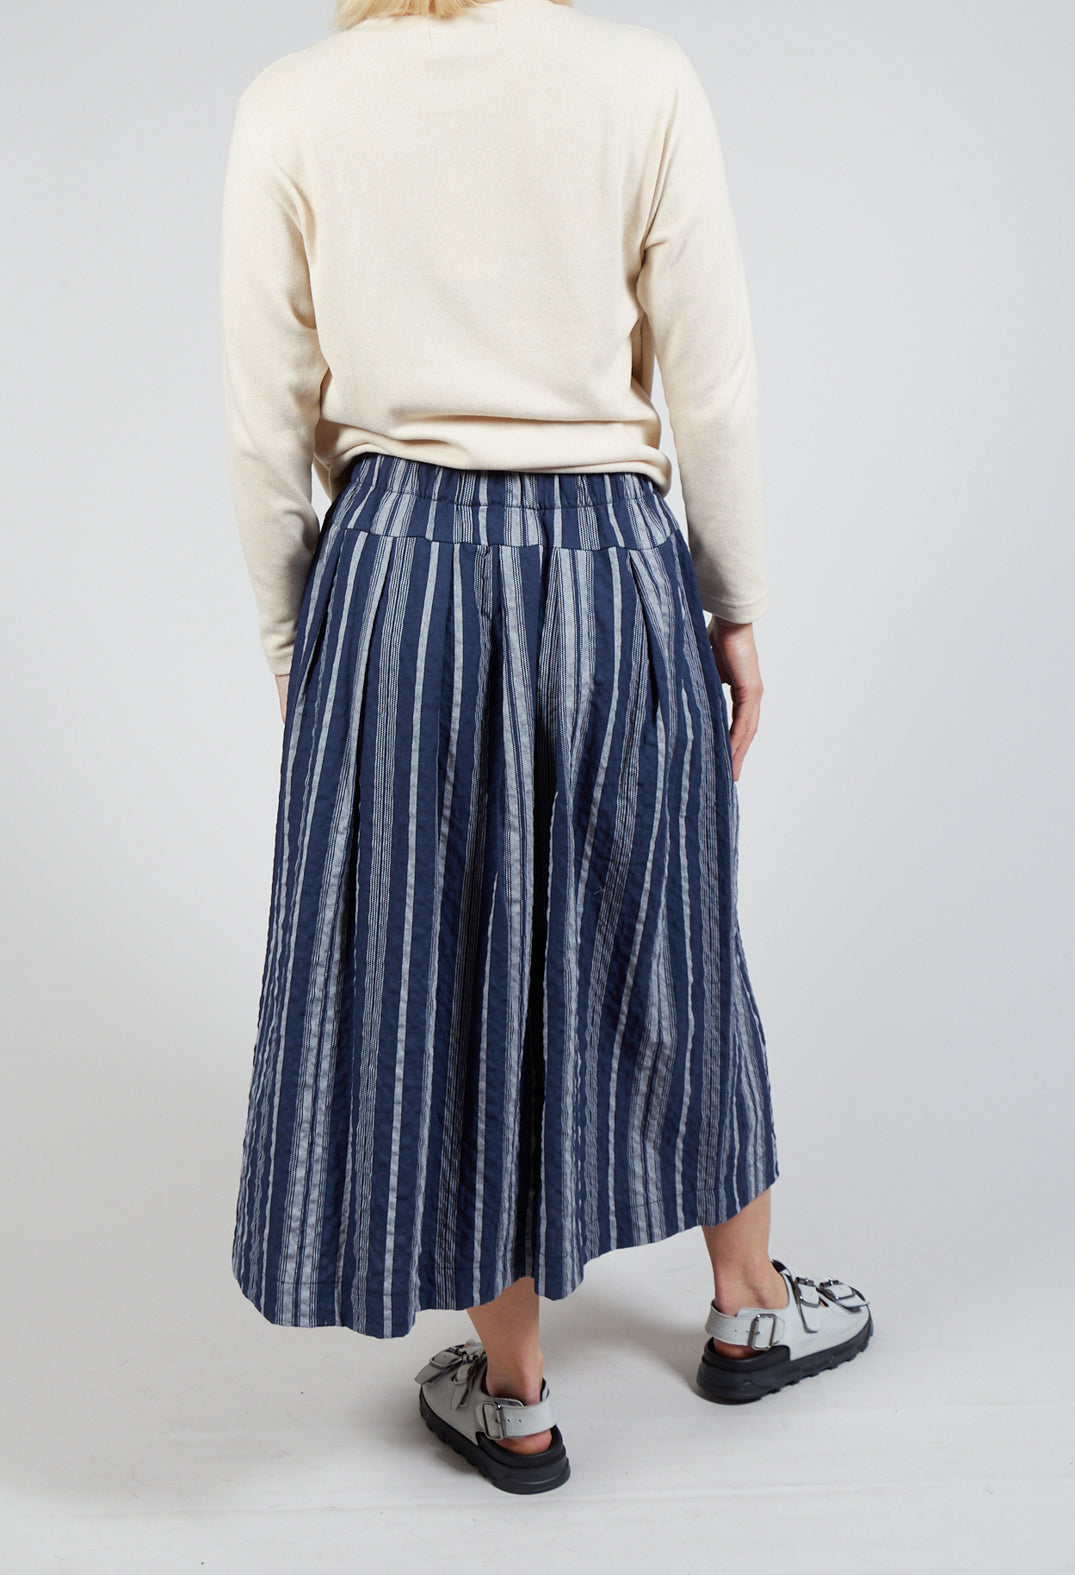 Pesci S Skirt In Blu Stripe